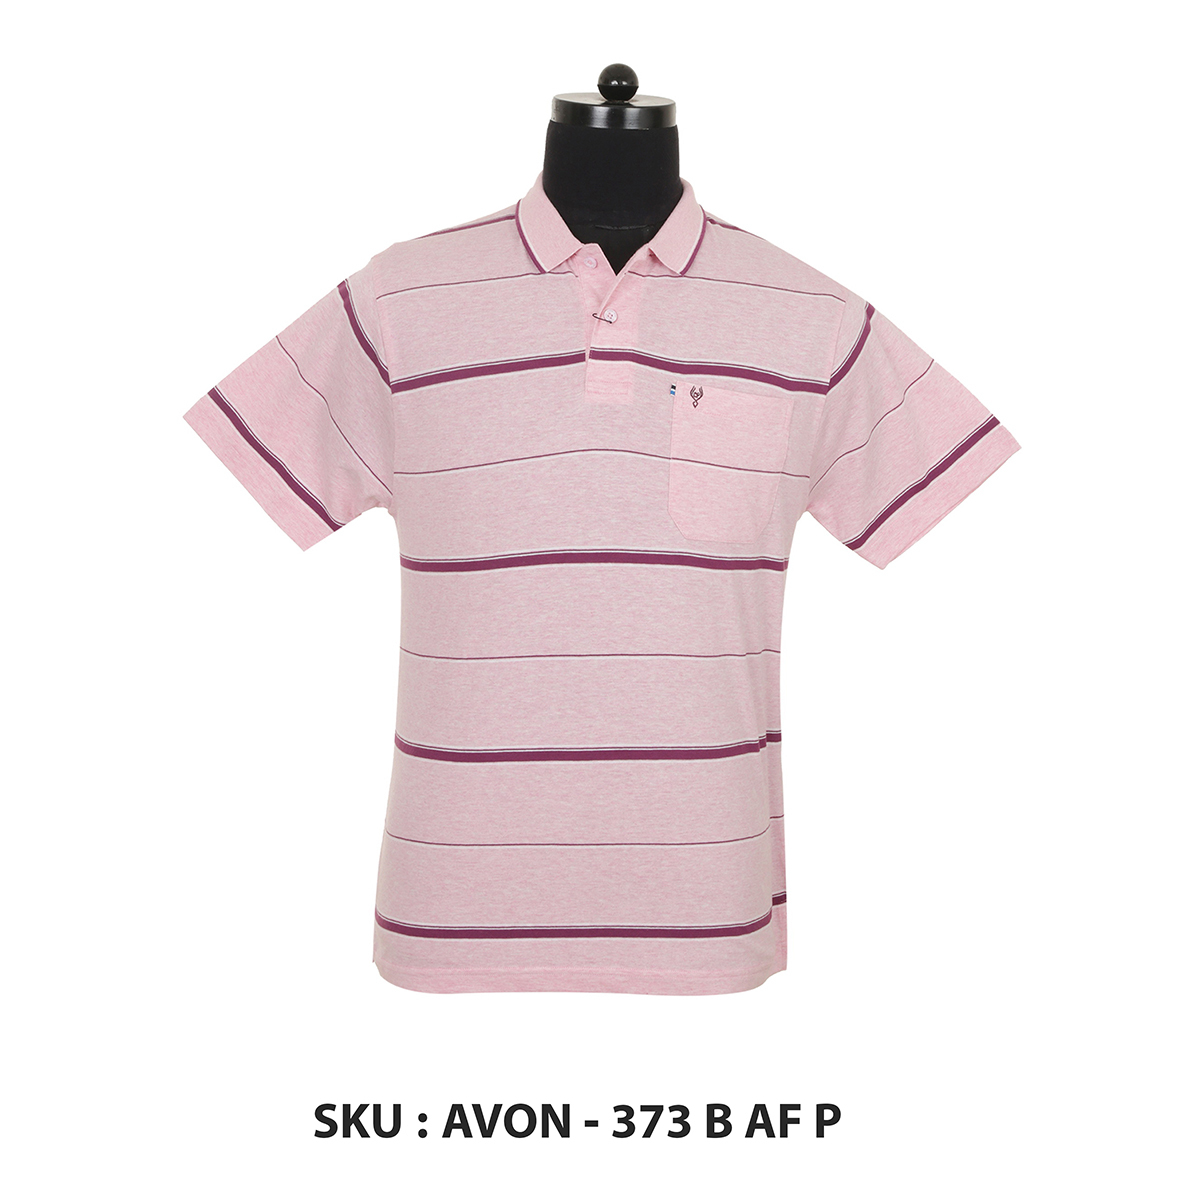 Classic Polo Mens T Shirt Avon - 373 B Af P Pink XXL